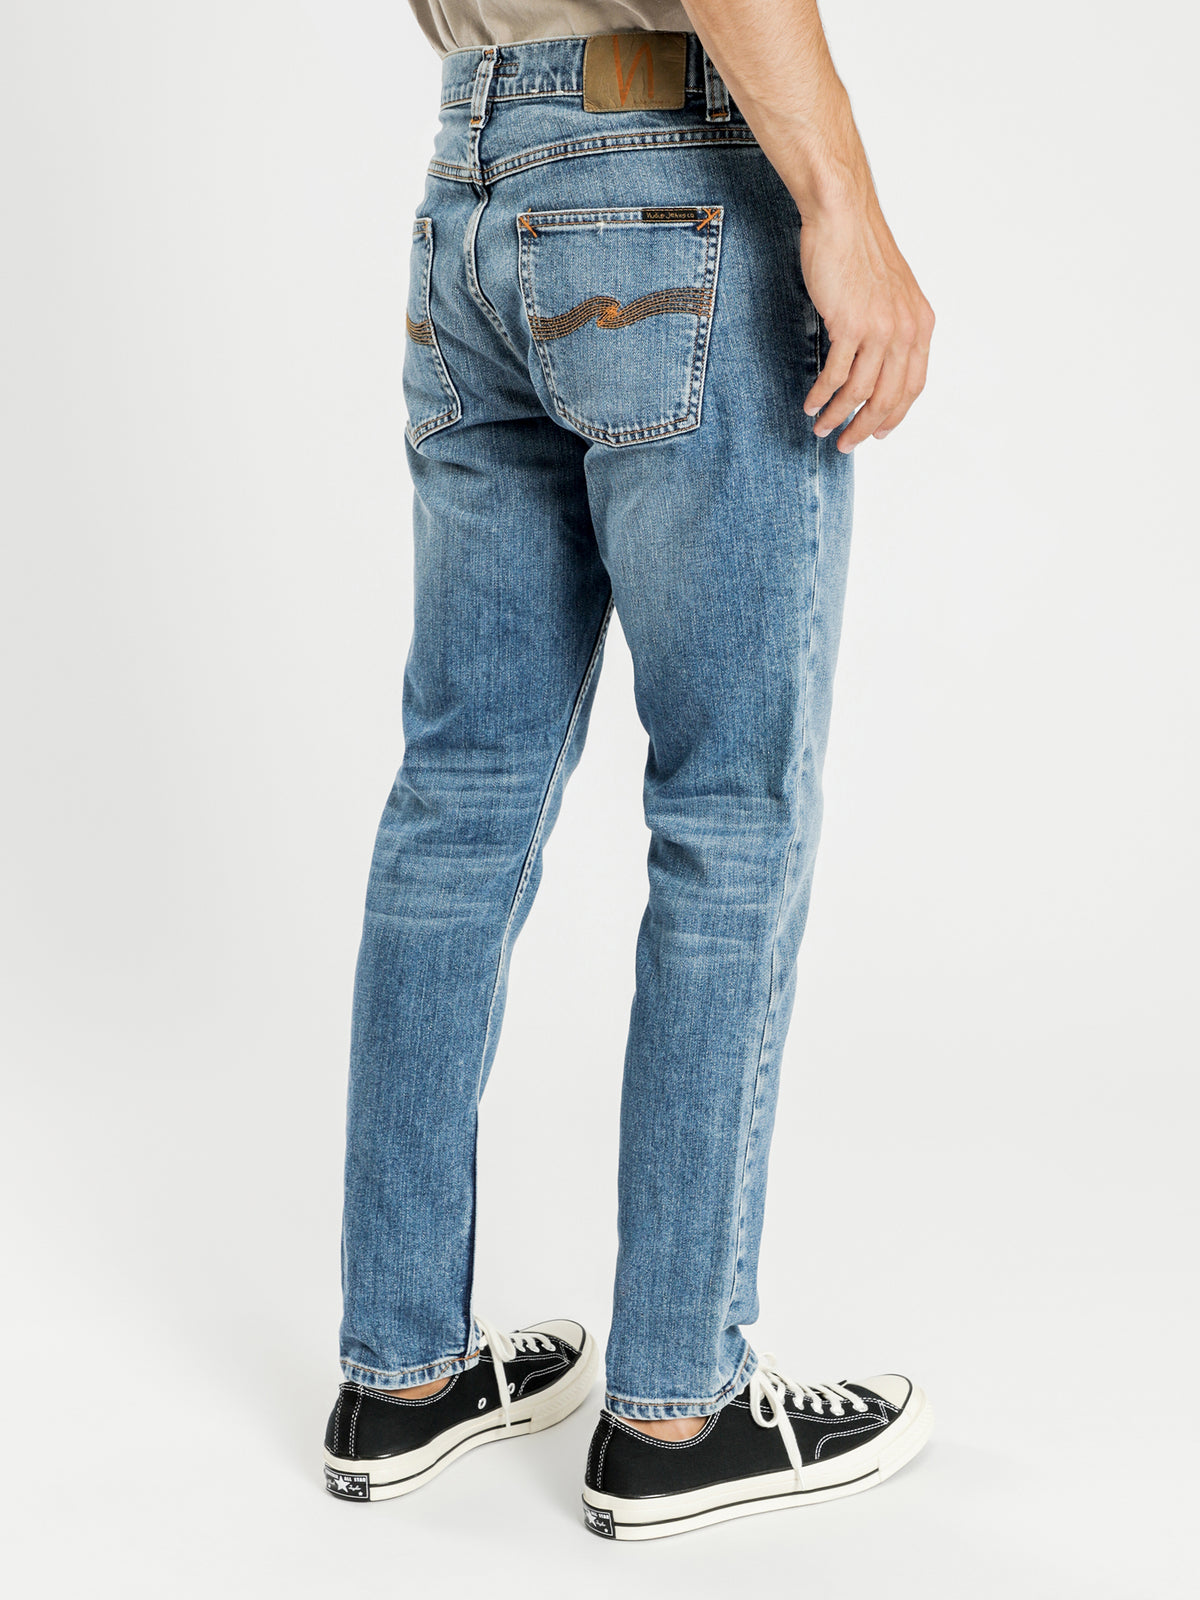 Lean Dean Jeans in Lost Orange Denim